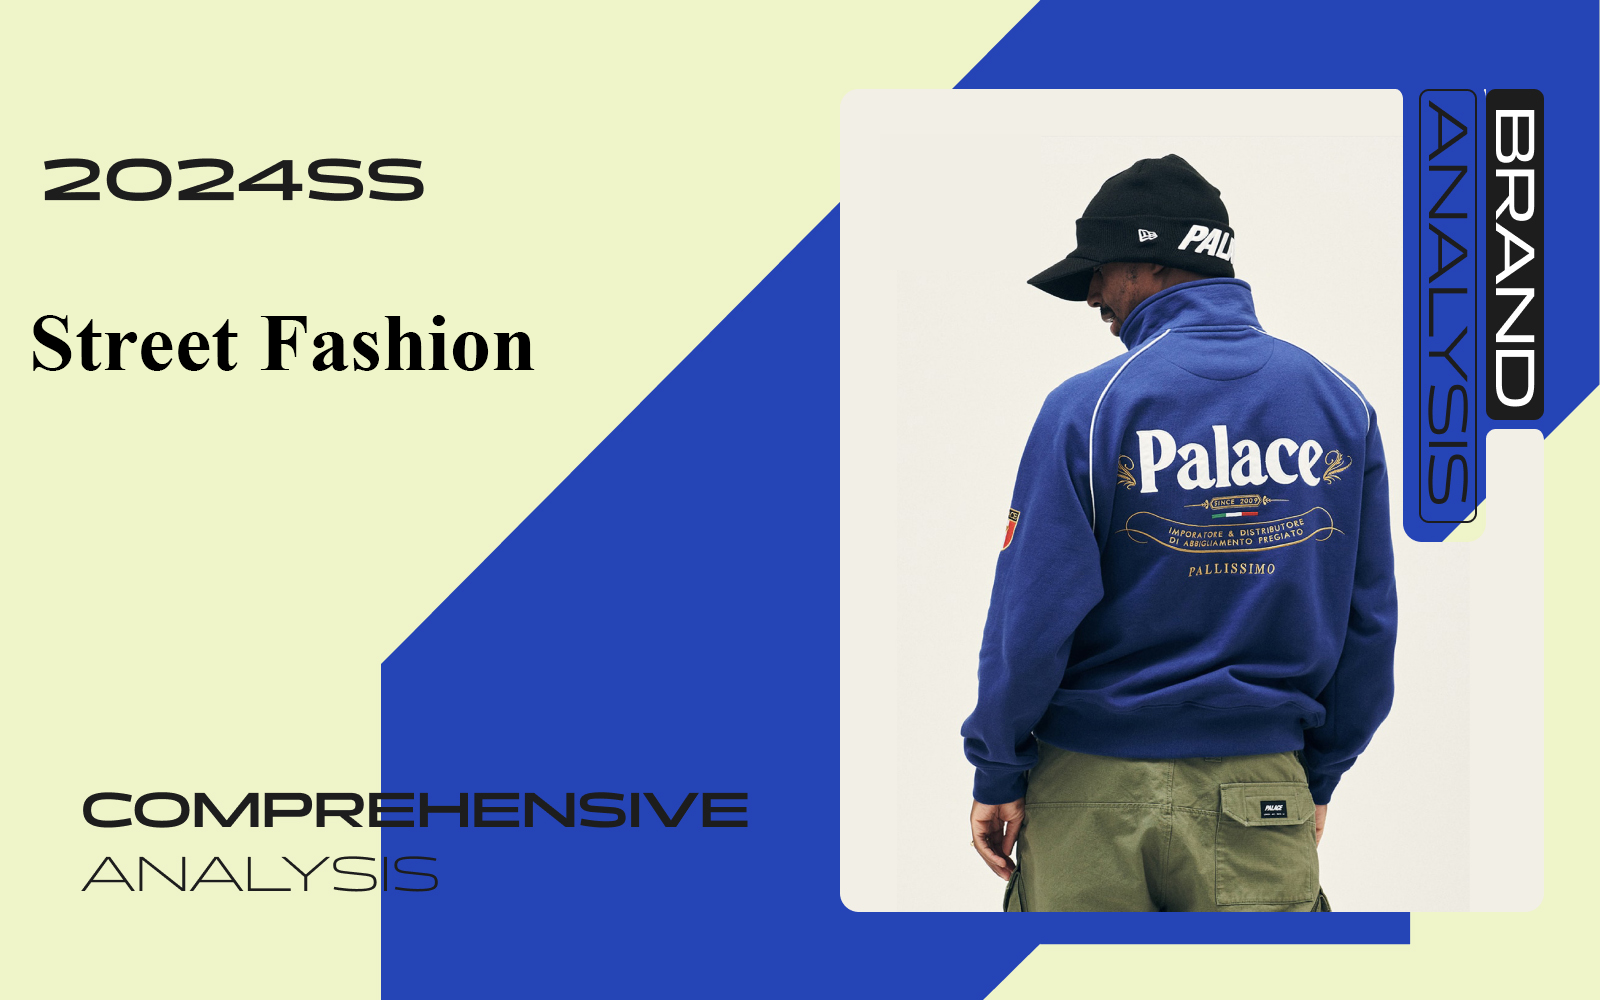 Street Fashion - The Comprehensive Analysis of Sportswear Designer Brand